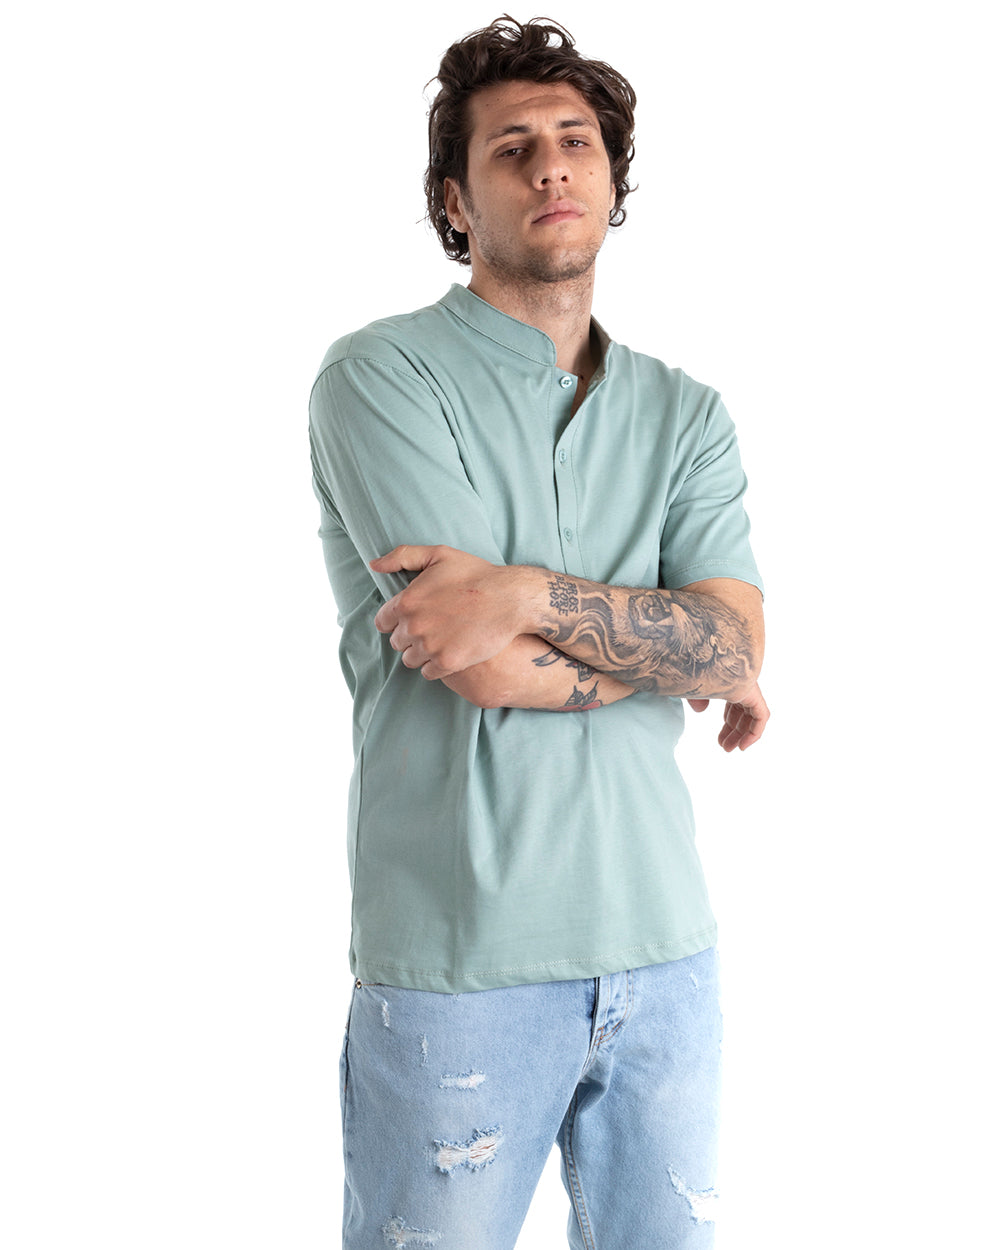 Men's T-shirt Button Neck Solid Color Aqua Green Short Sleeve Basic Casual GIOSAL